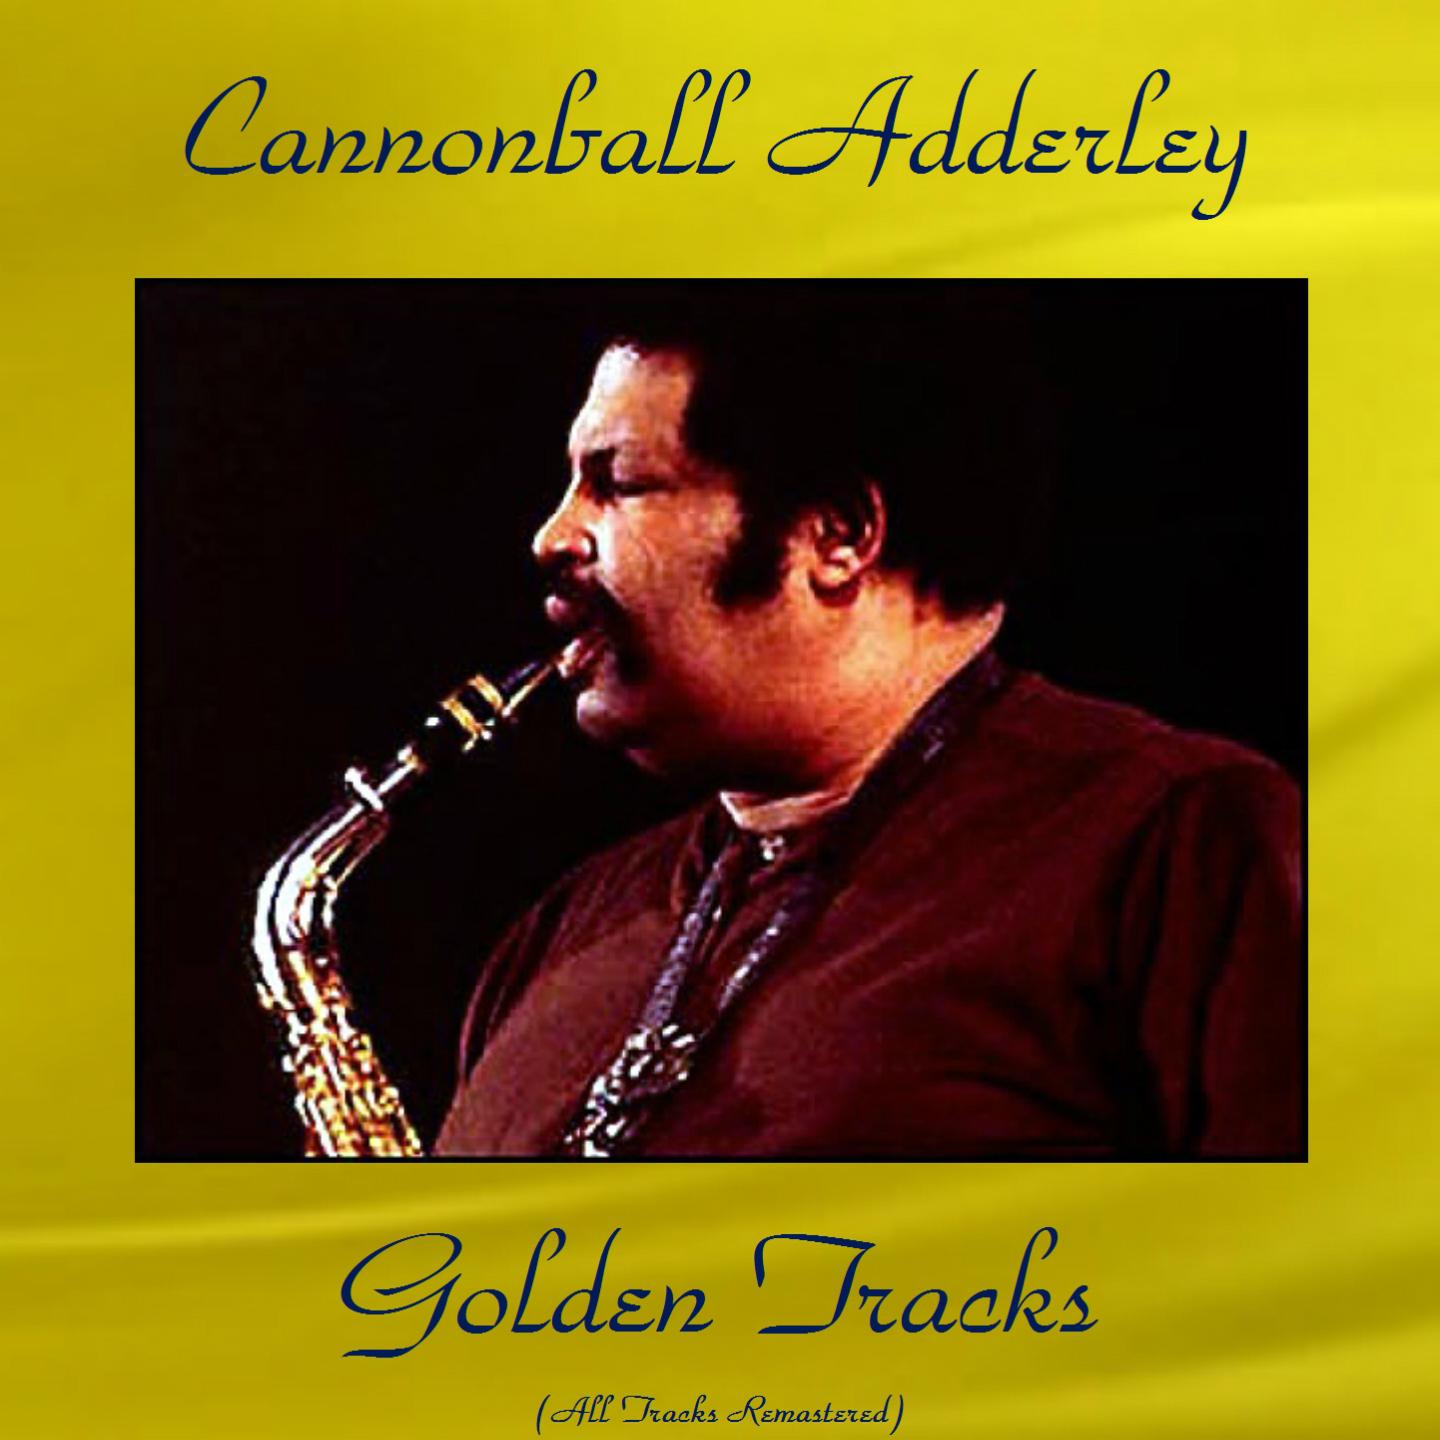 Cannonball Adderley Golden Tracks (All Tracks Remastered)